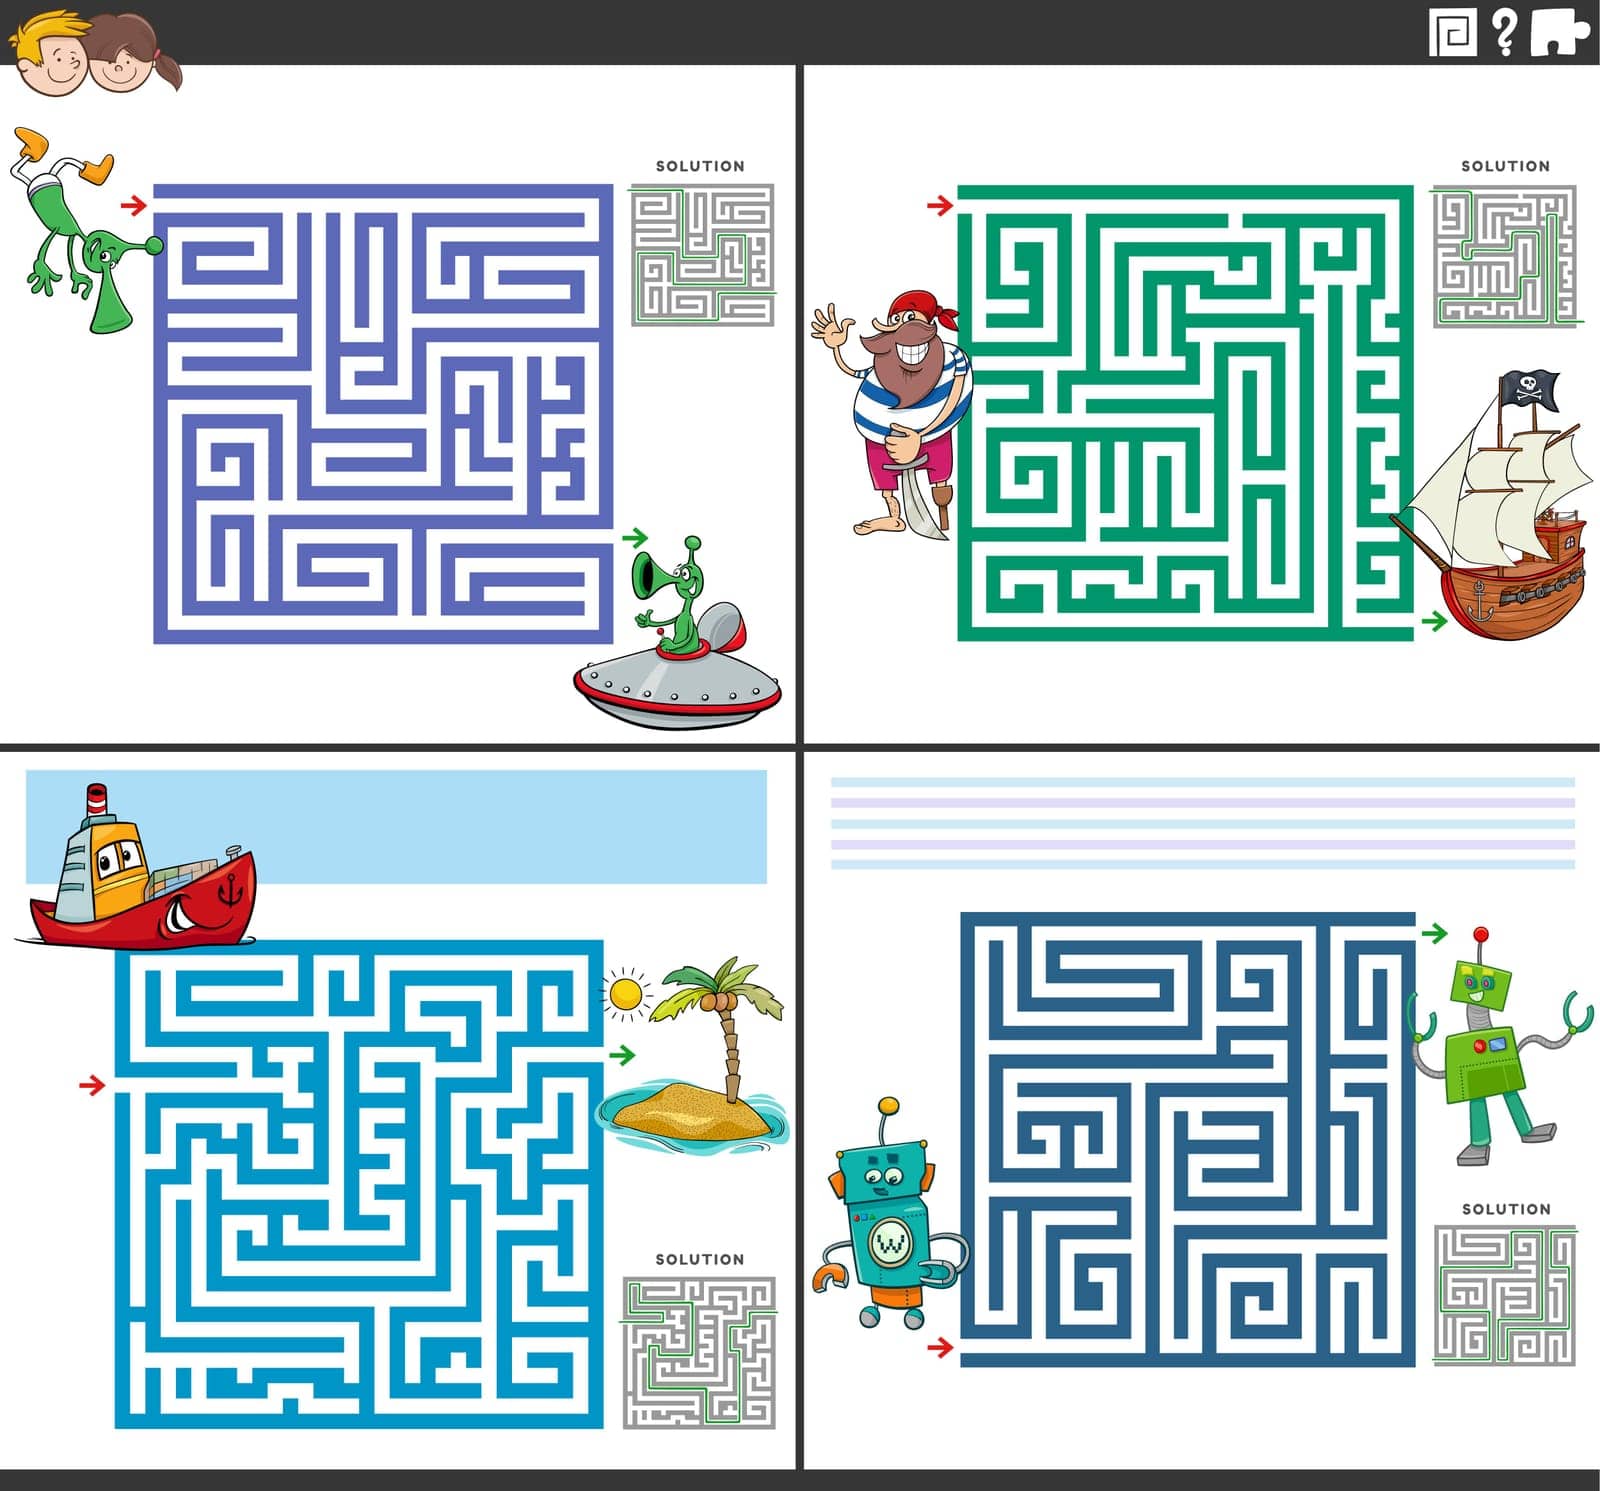 maze activity games set with funny cartoon characters by izakowski